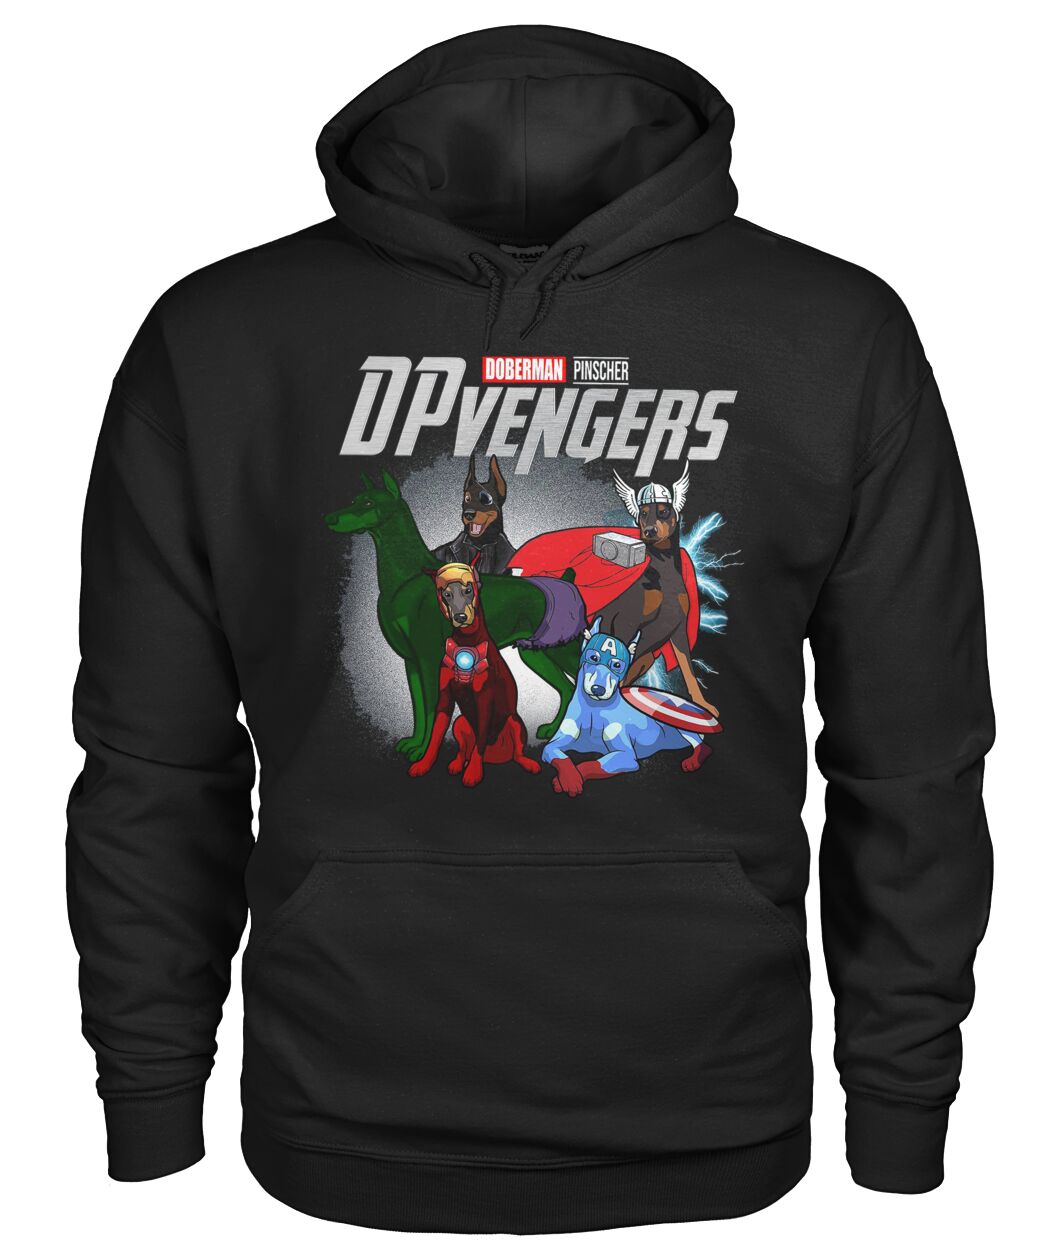 Doberman Dpvengers 3D Hoodie, Shirt 8